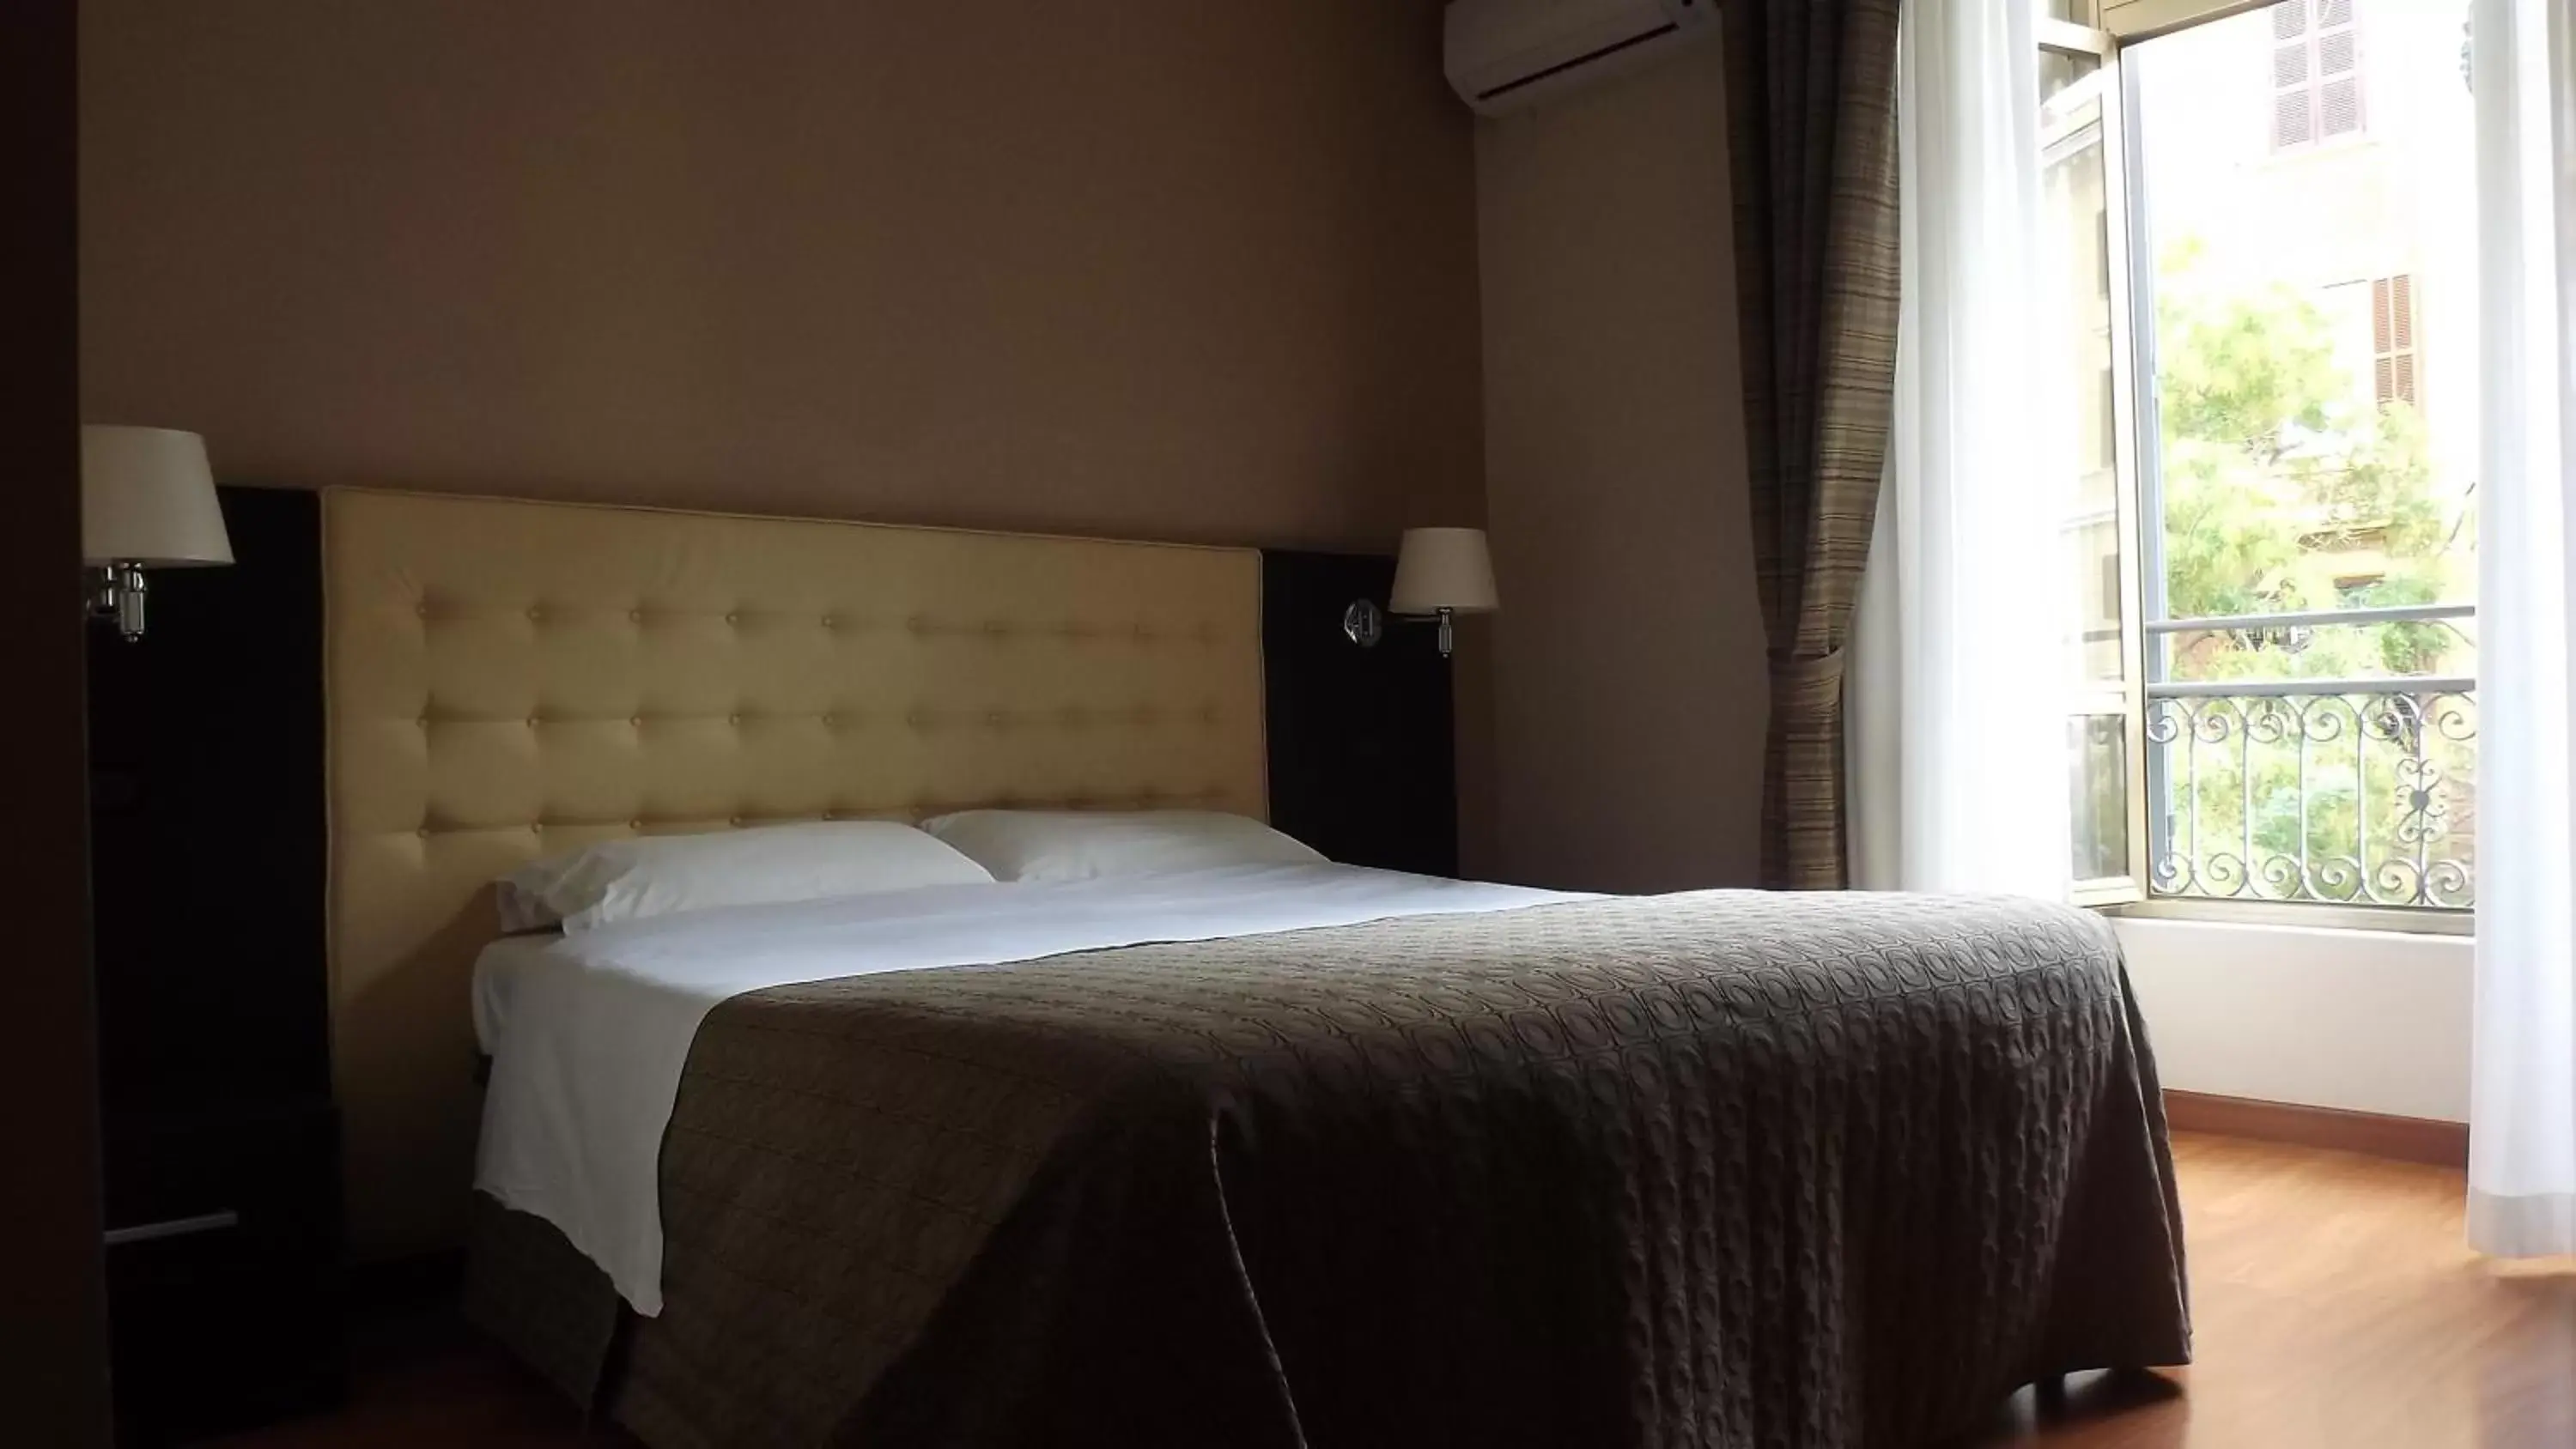 Bed, Room Photo in Hotel Nautilus